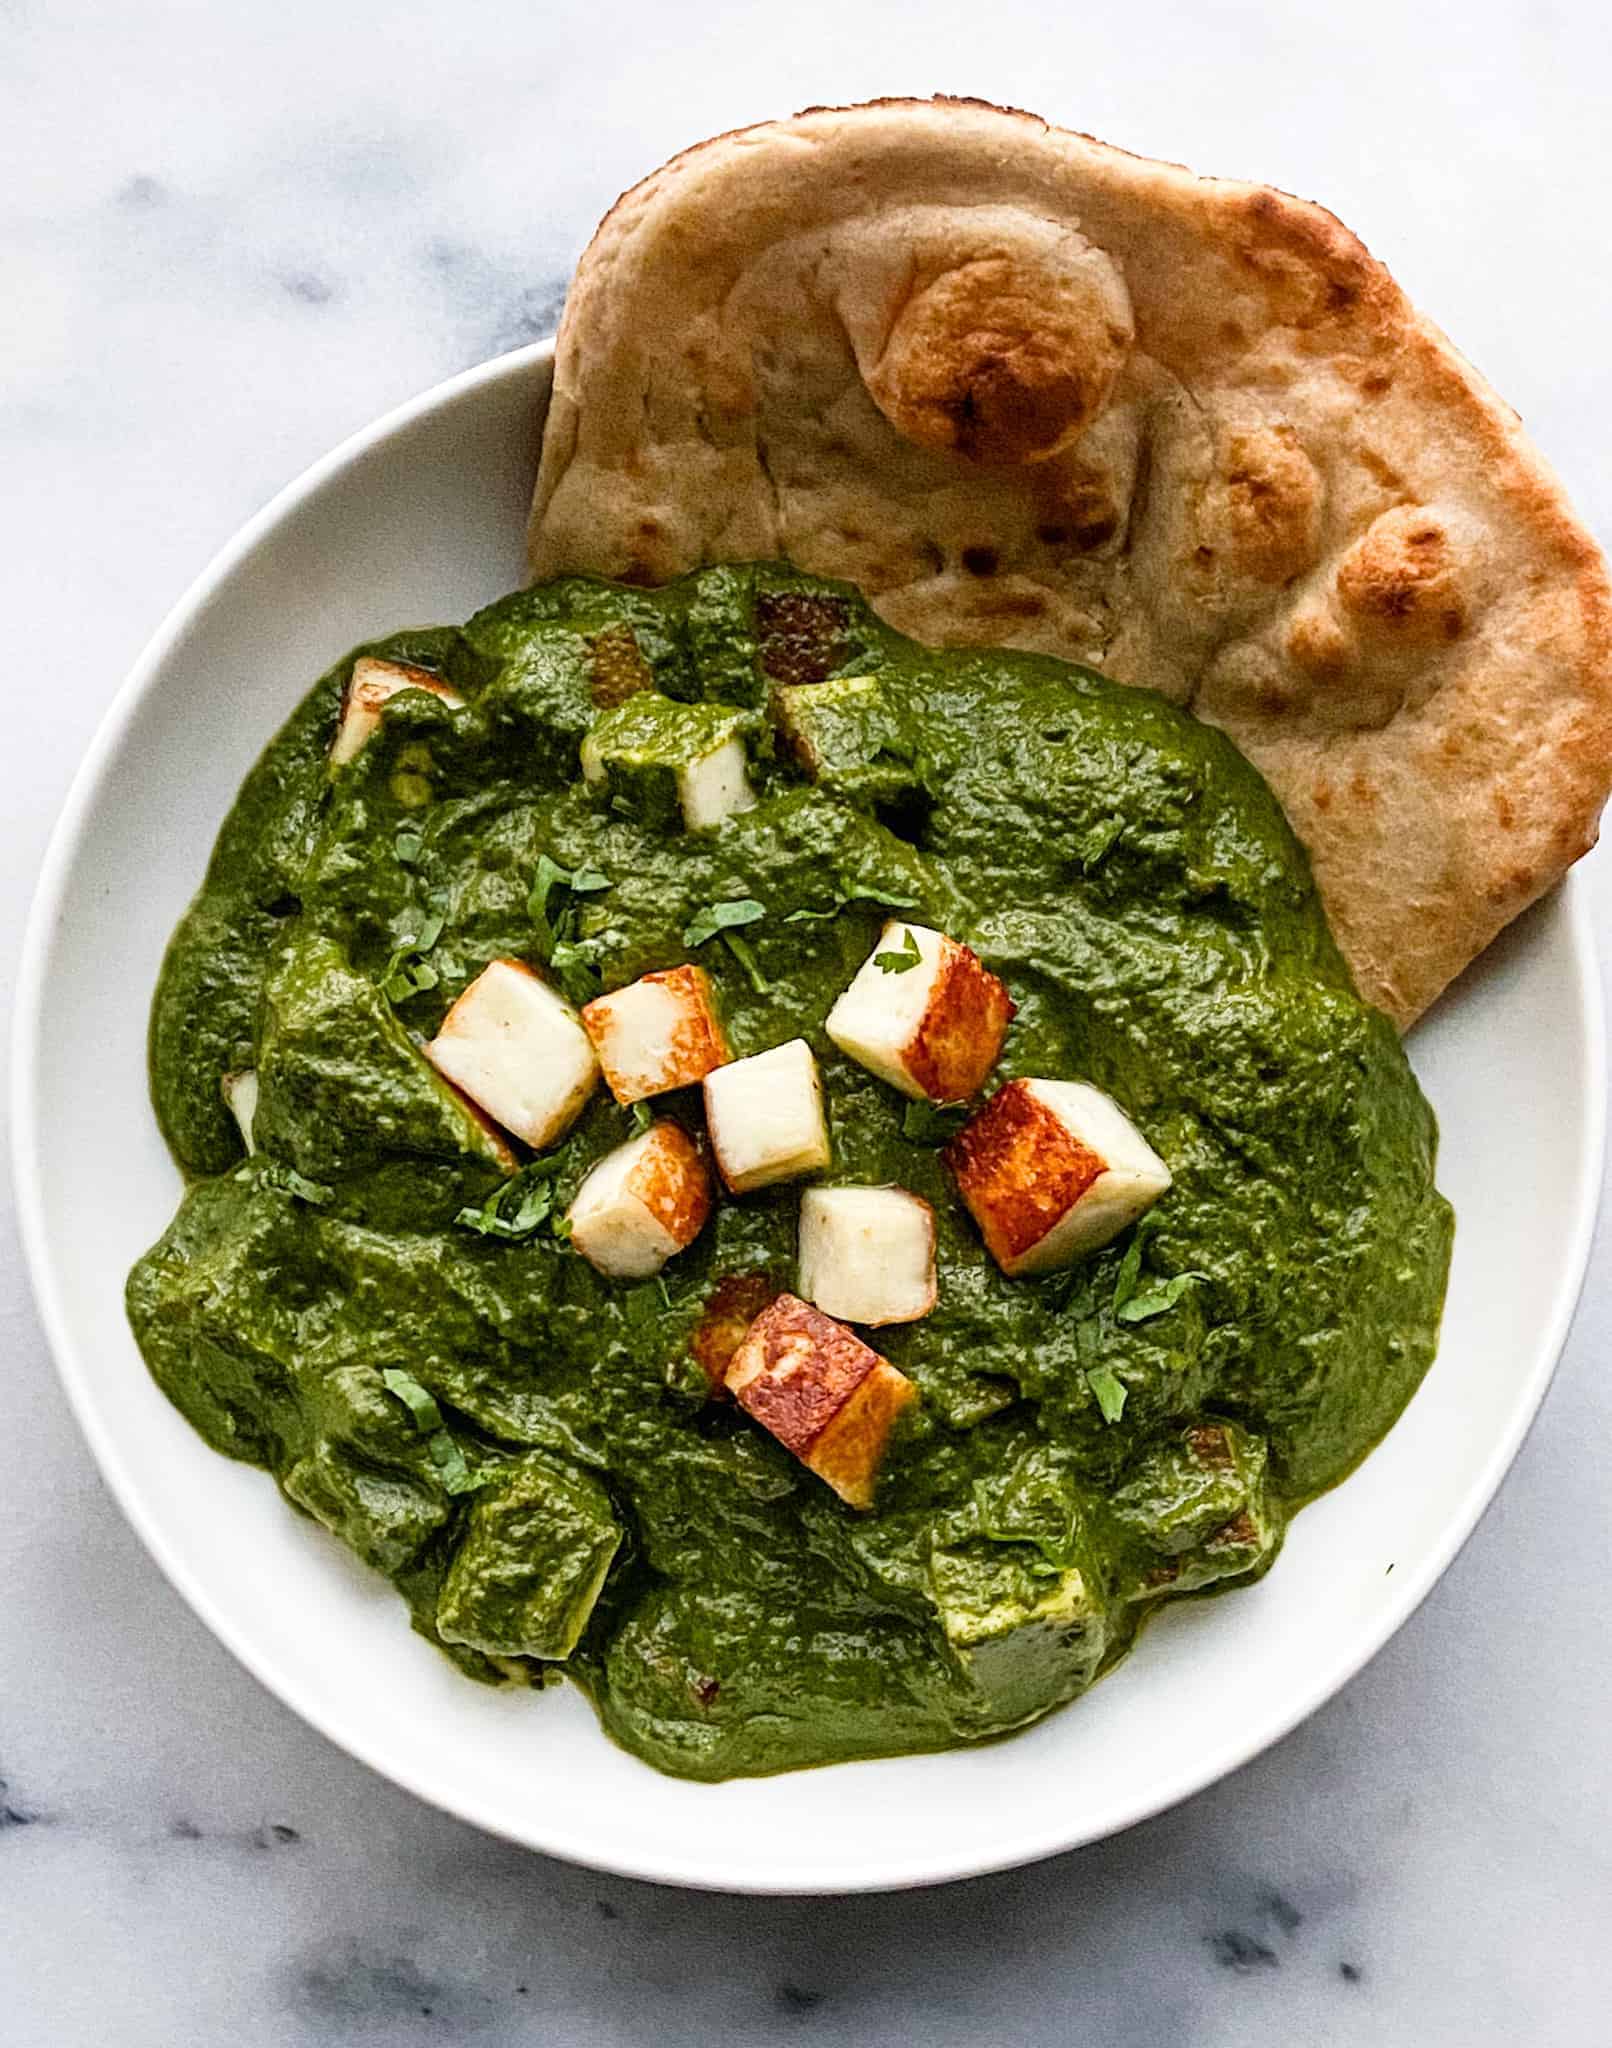 palak paneer recipe. easy palak paneer. Indian cottage cheese & spinach. Saag paneer recipe